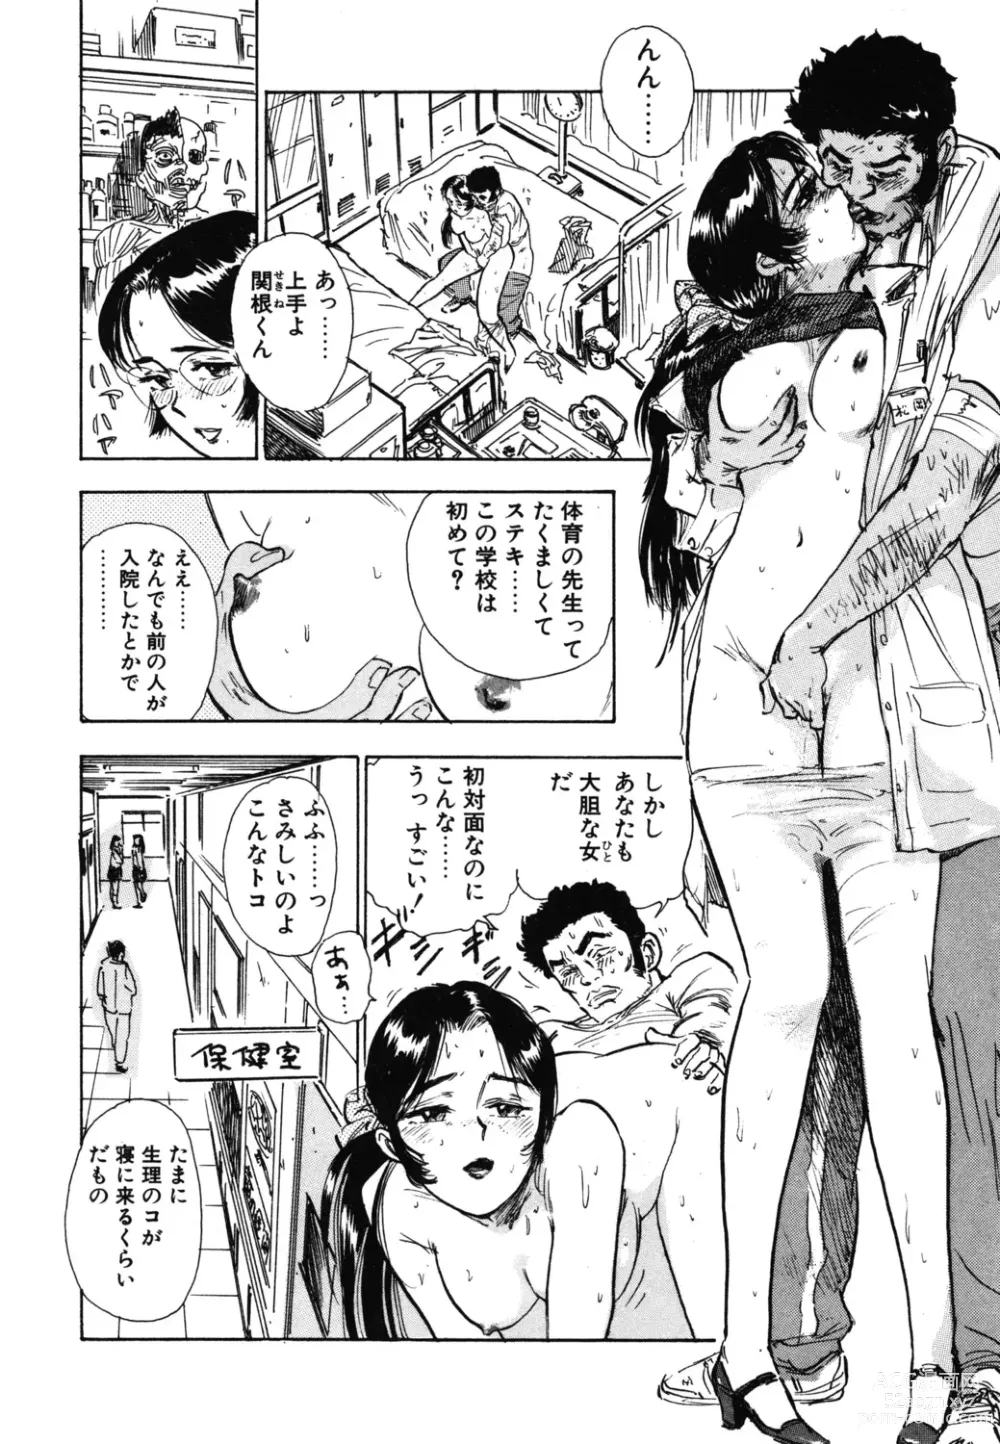 Page 6 of manga Abunai Reiko Sensei 1